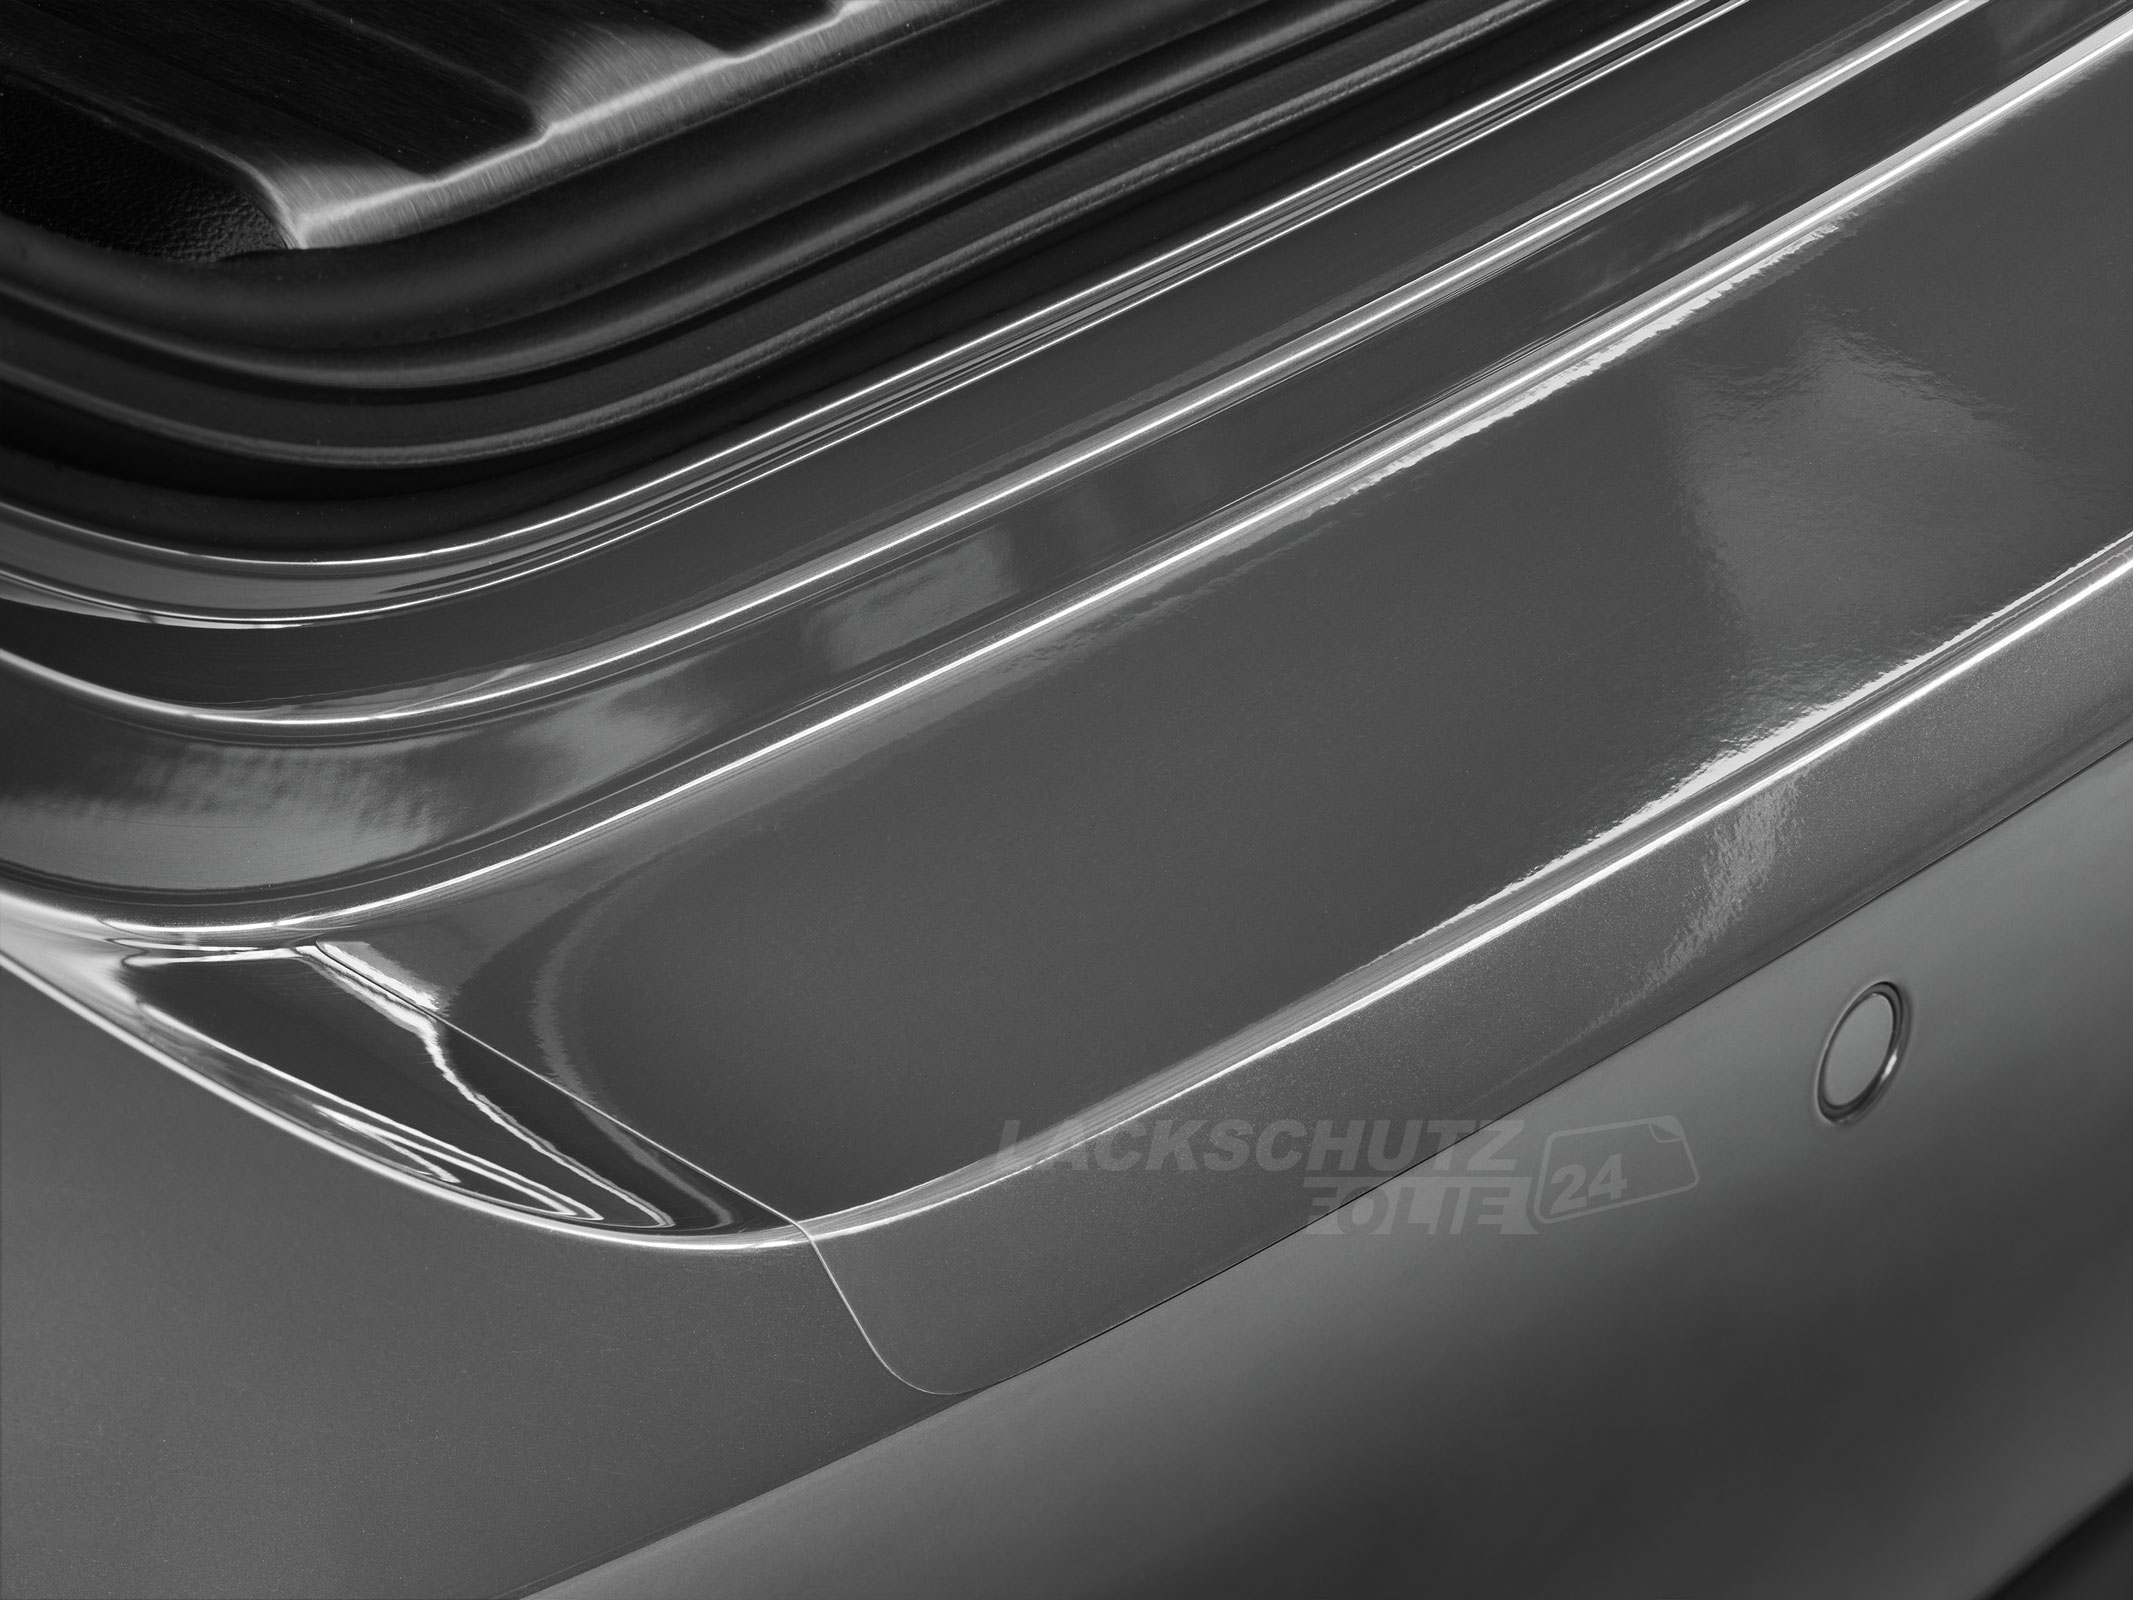 Ladekantenschutzfolie - Transparent Glatt Hochglänzend 150 µm stark für Audi A4 Limousine B9, Typ 8W, S-LINE, ab BJ 11/2015 + Facelift